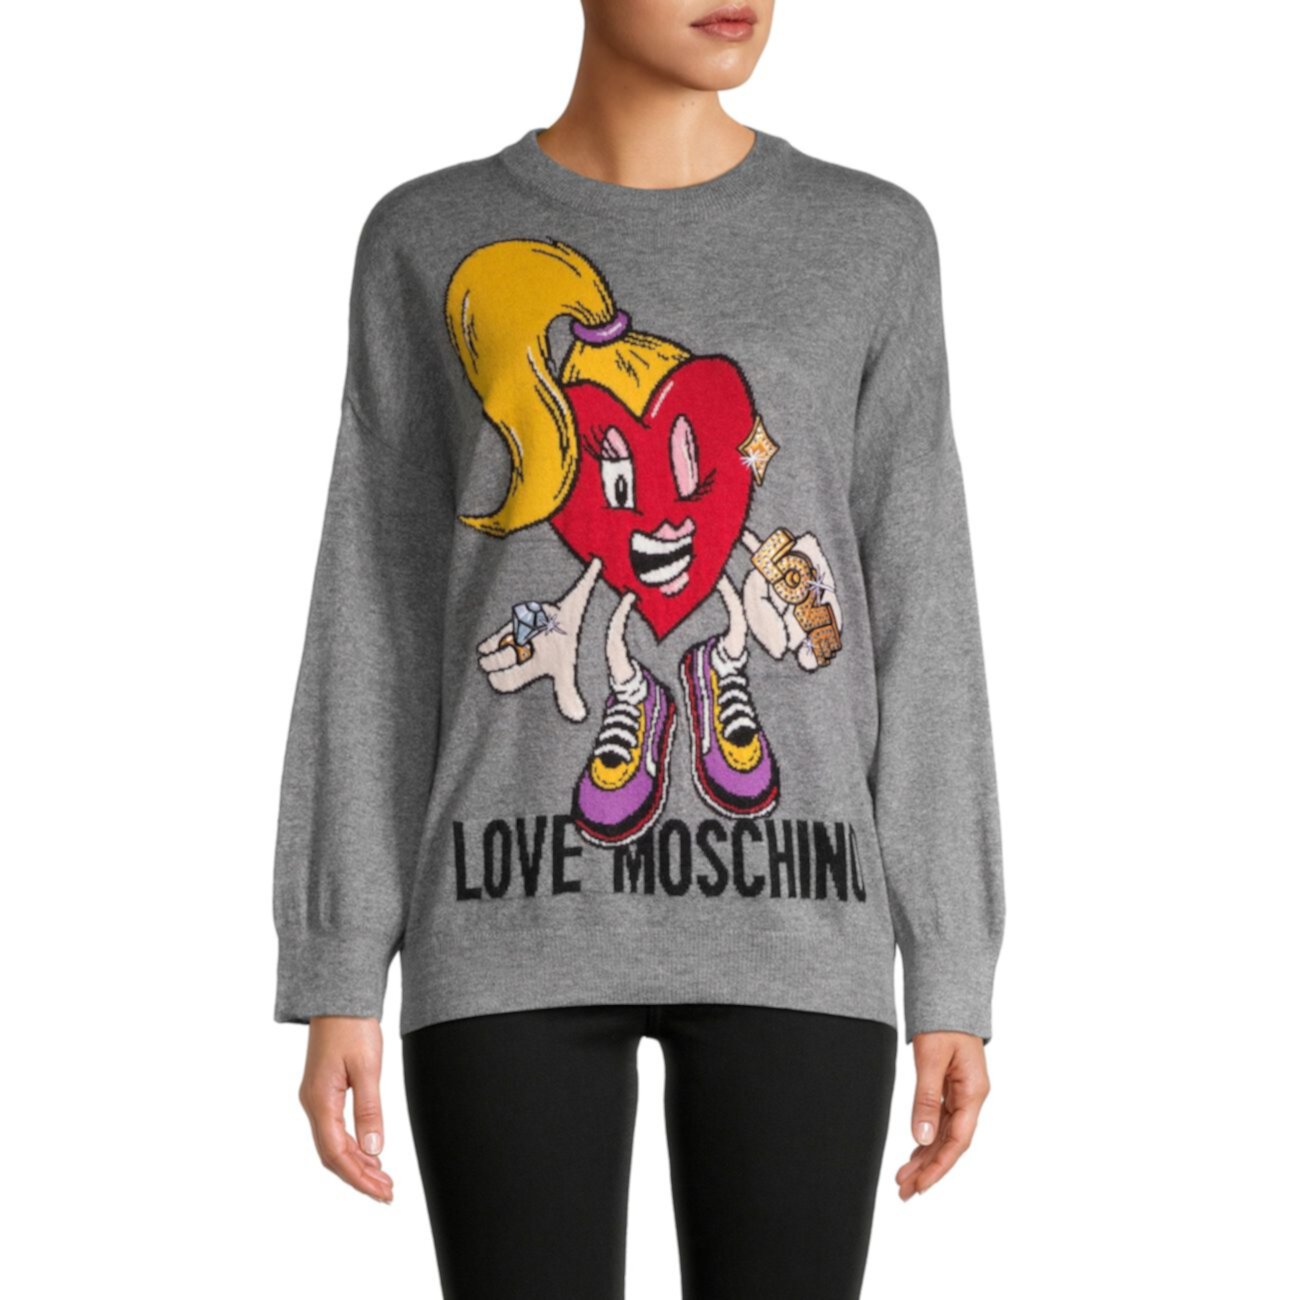 Свитер с надписью Heart Logo LOVE Moschino